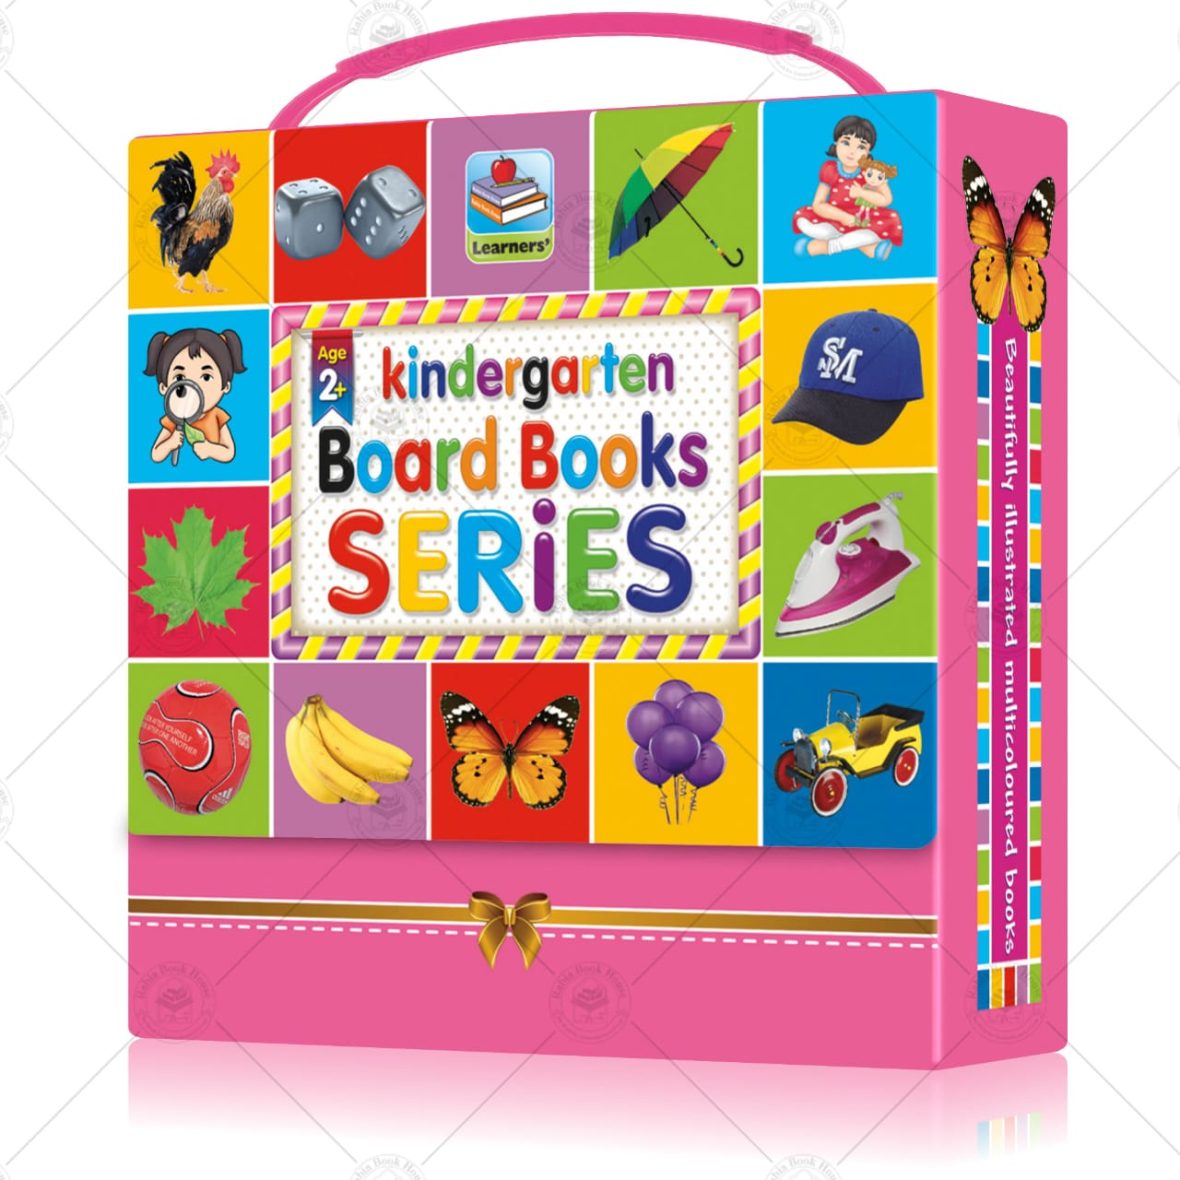 Kindergarten Board Books Series